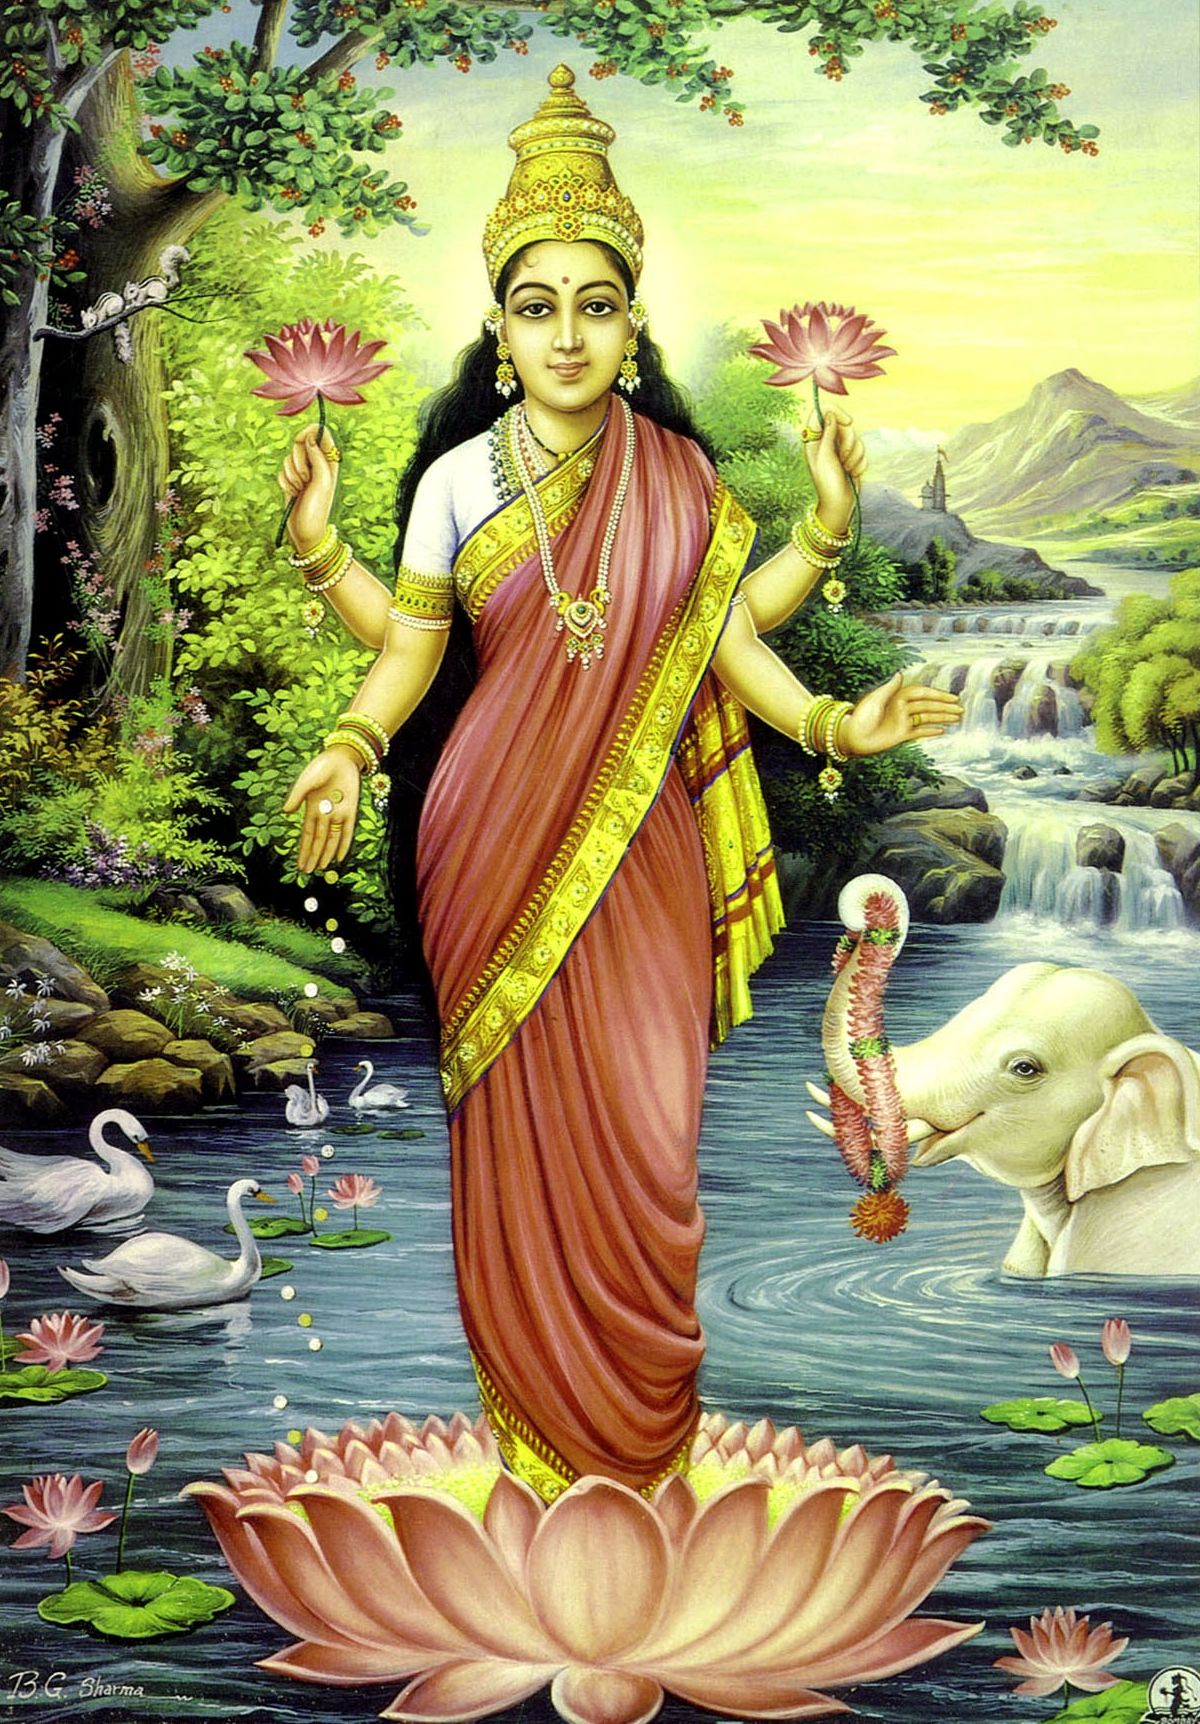 Lakshmi Devi on a lotus | Indian spiritual art, goddess, meditation ...